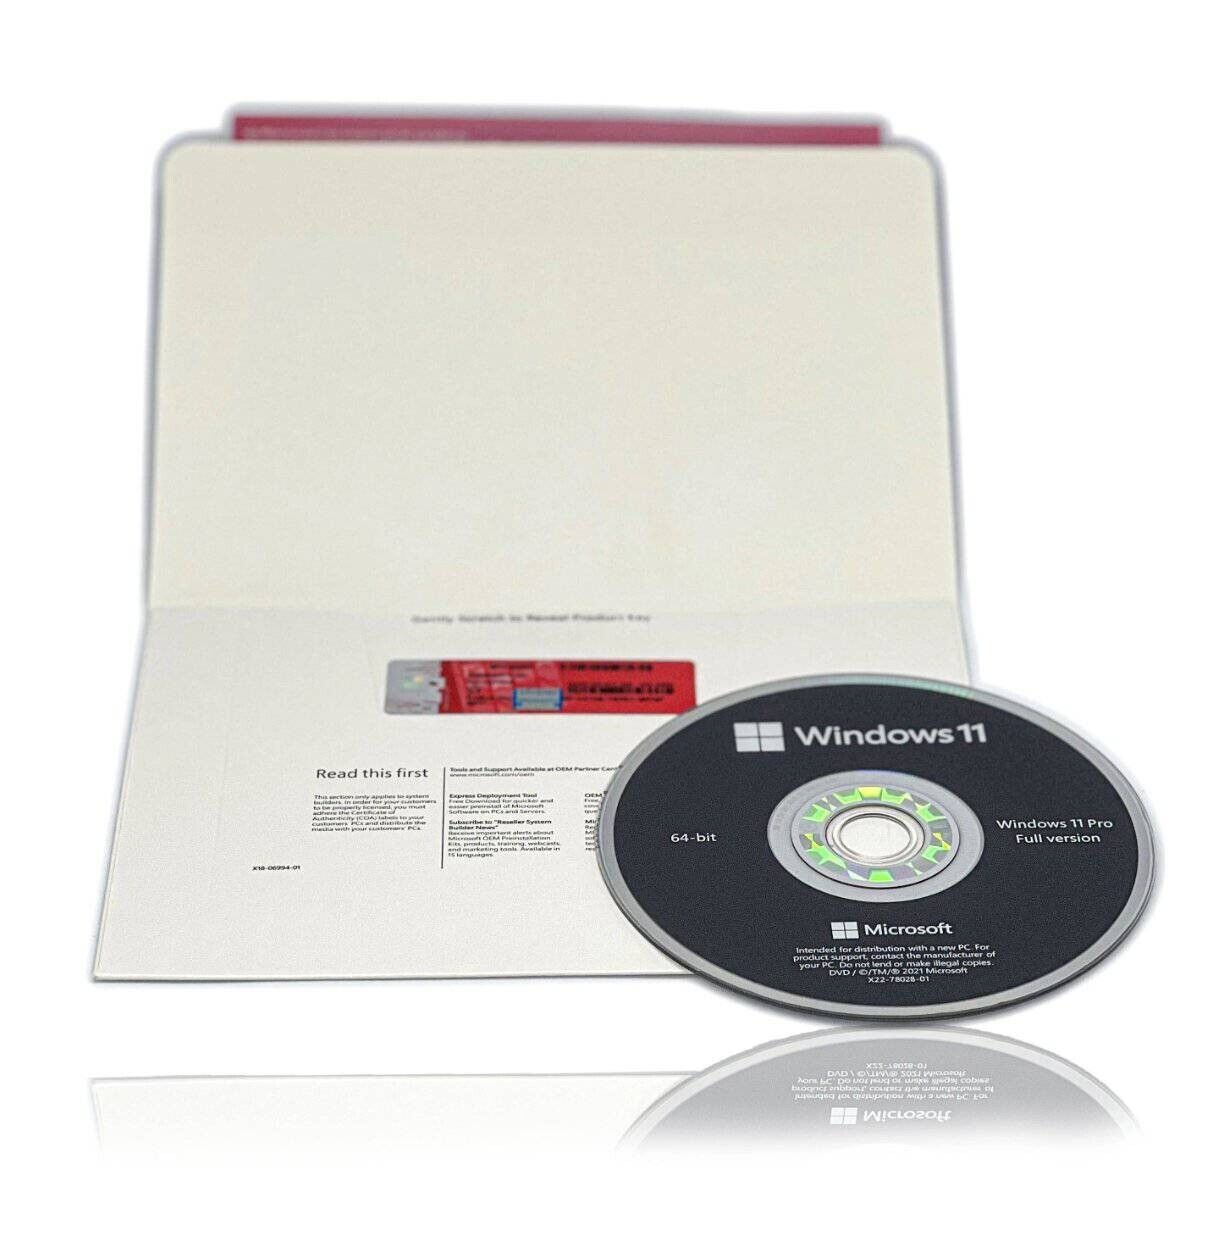 MS Win 11 Pro License Key & 64bit Installation DVD Full Version - Sealed Package